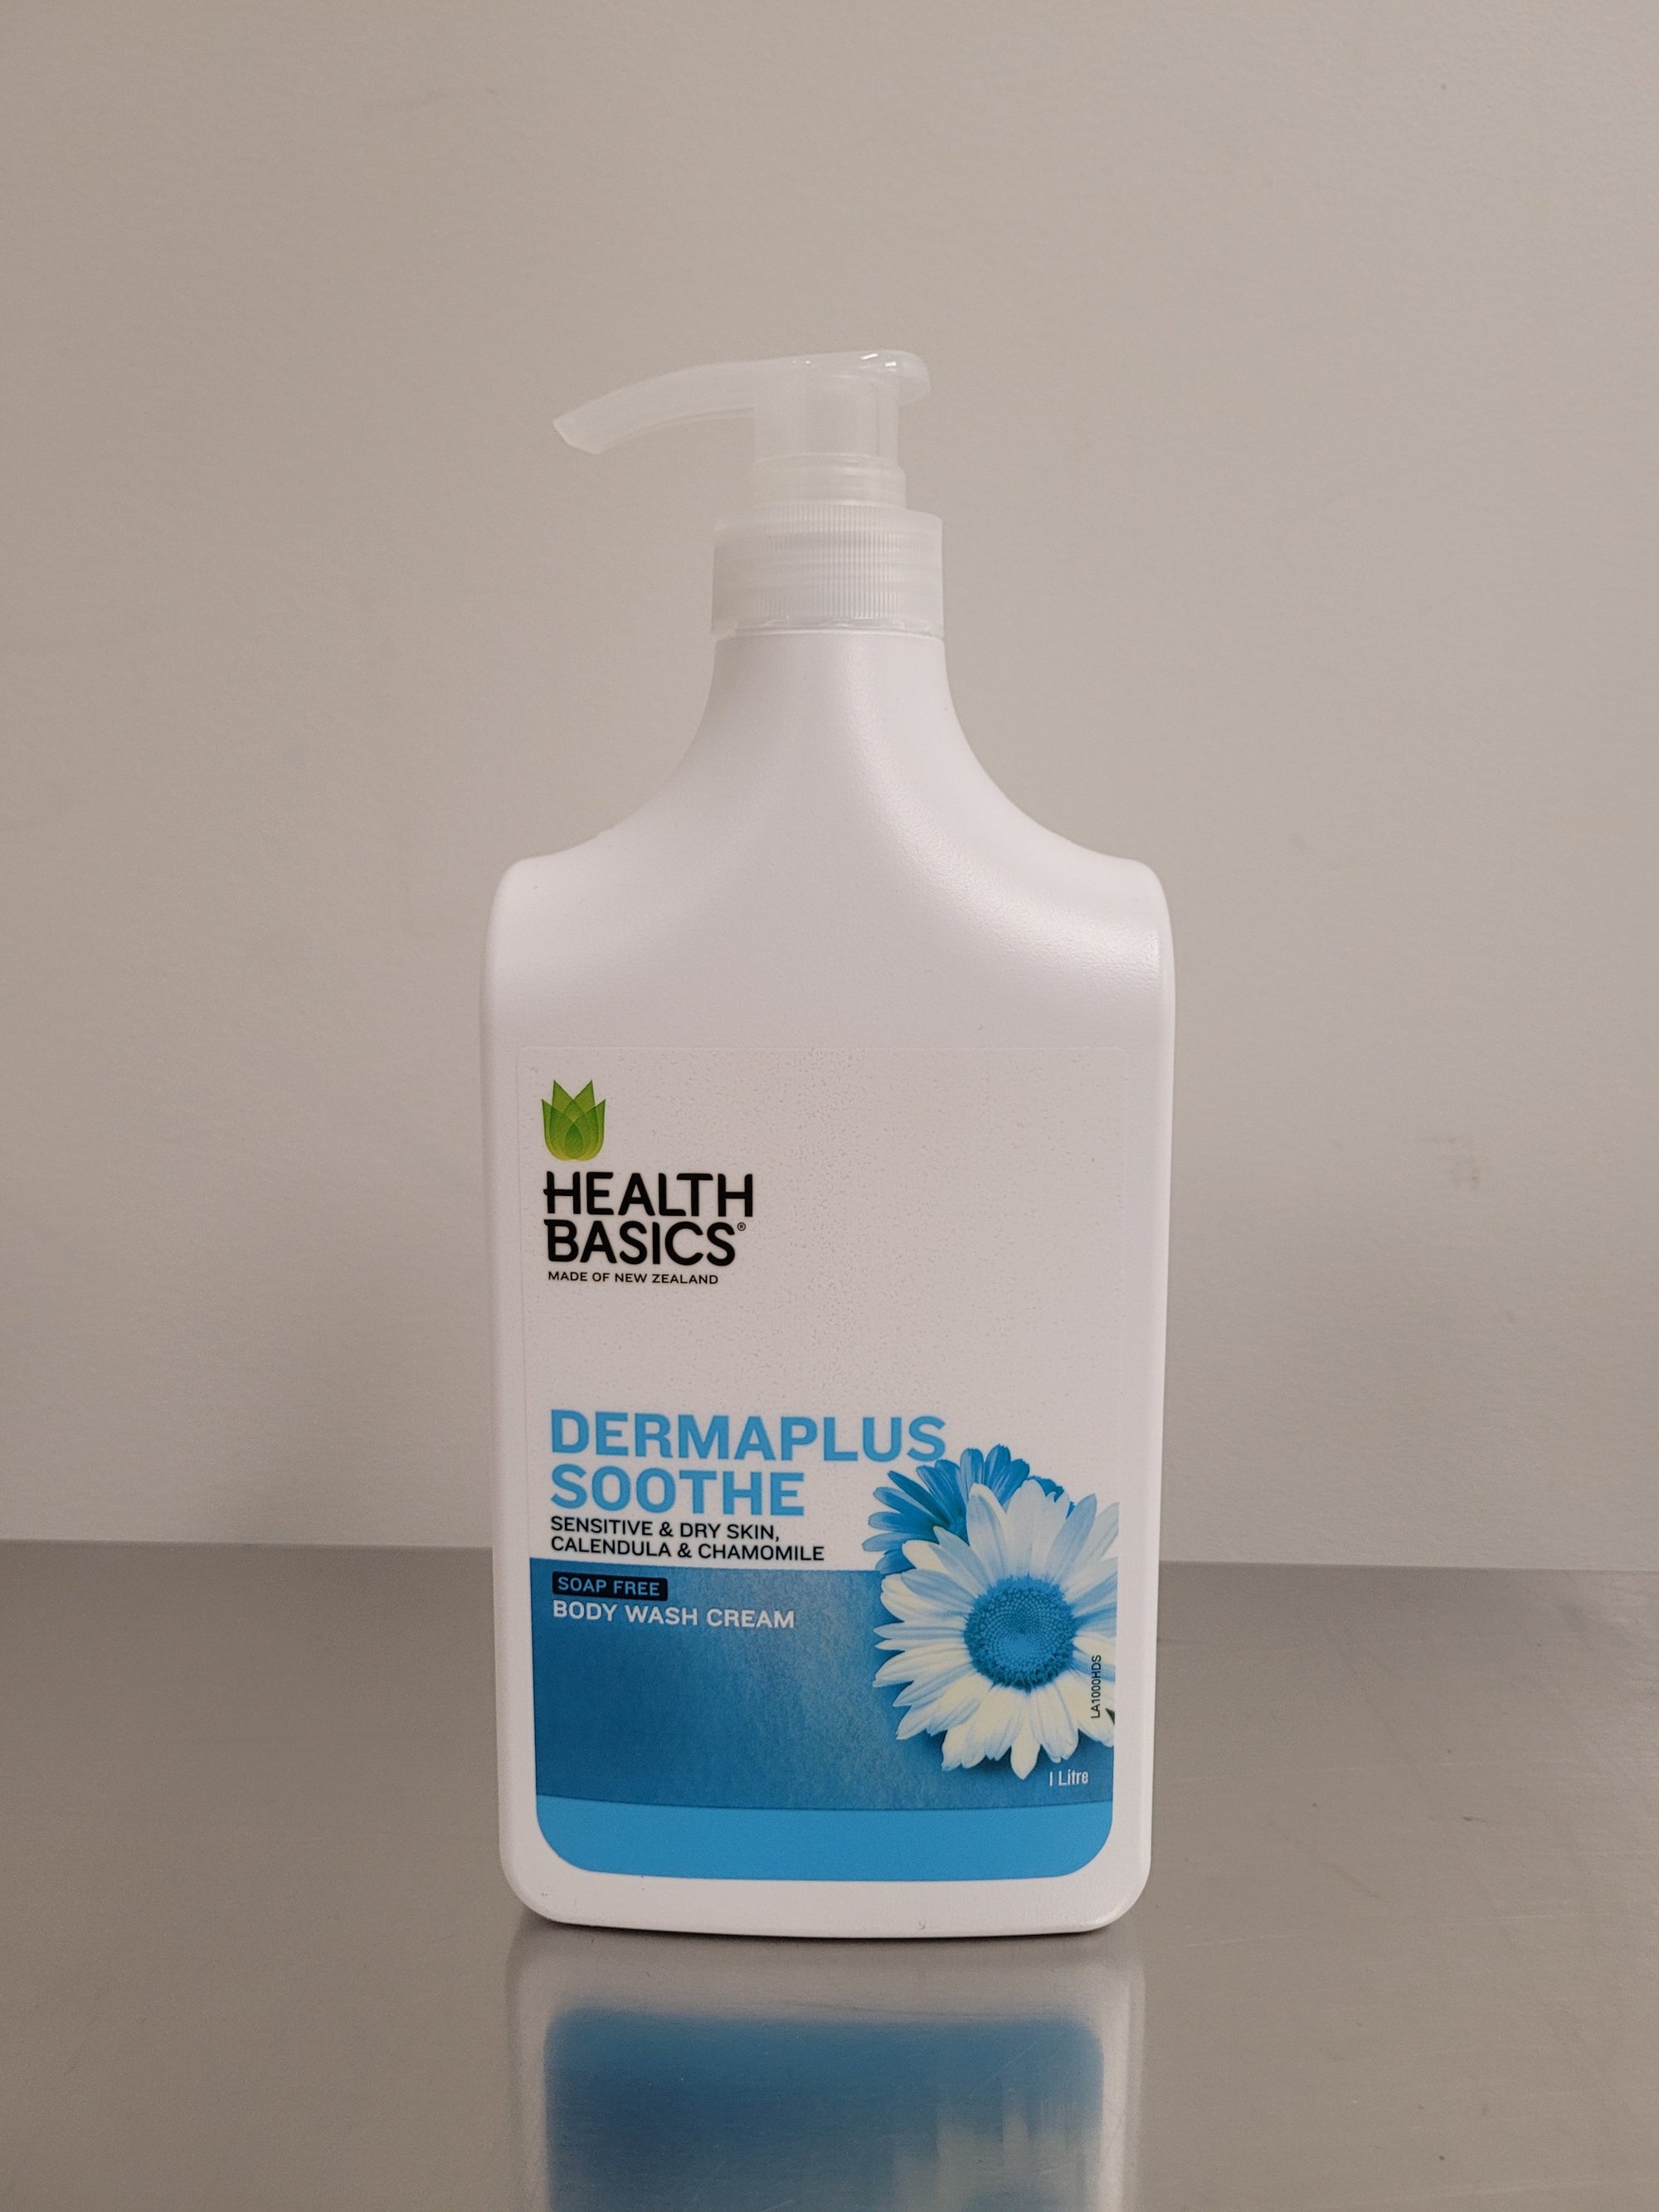 Dermaplus Soothe Soap Free Body Wash Cream 1L